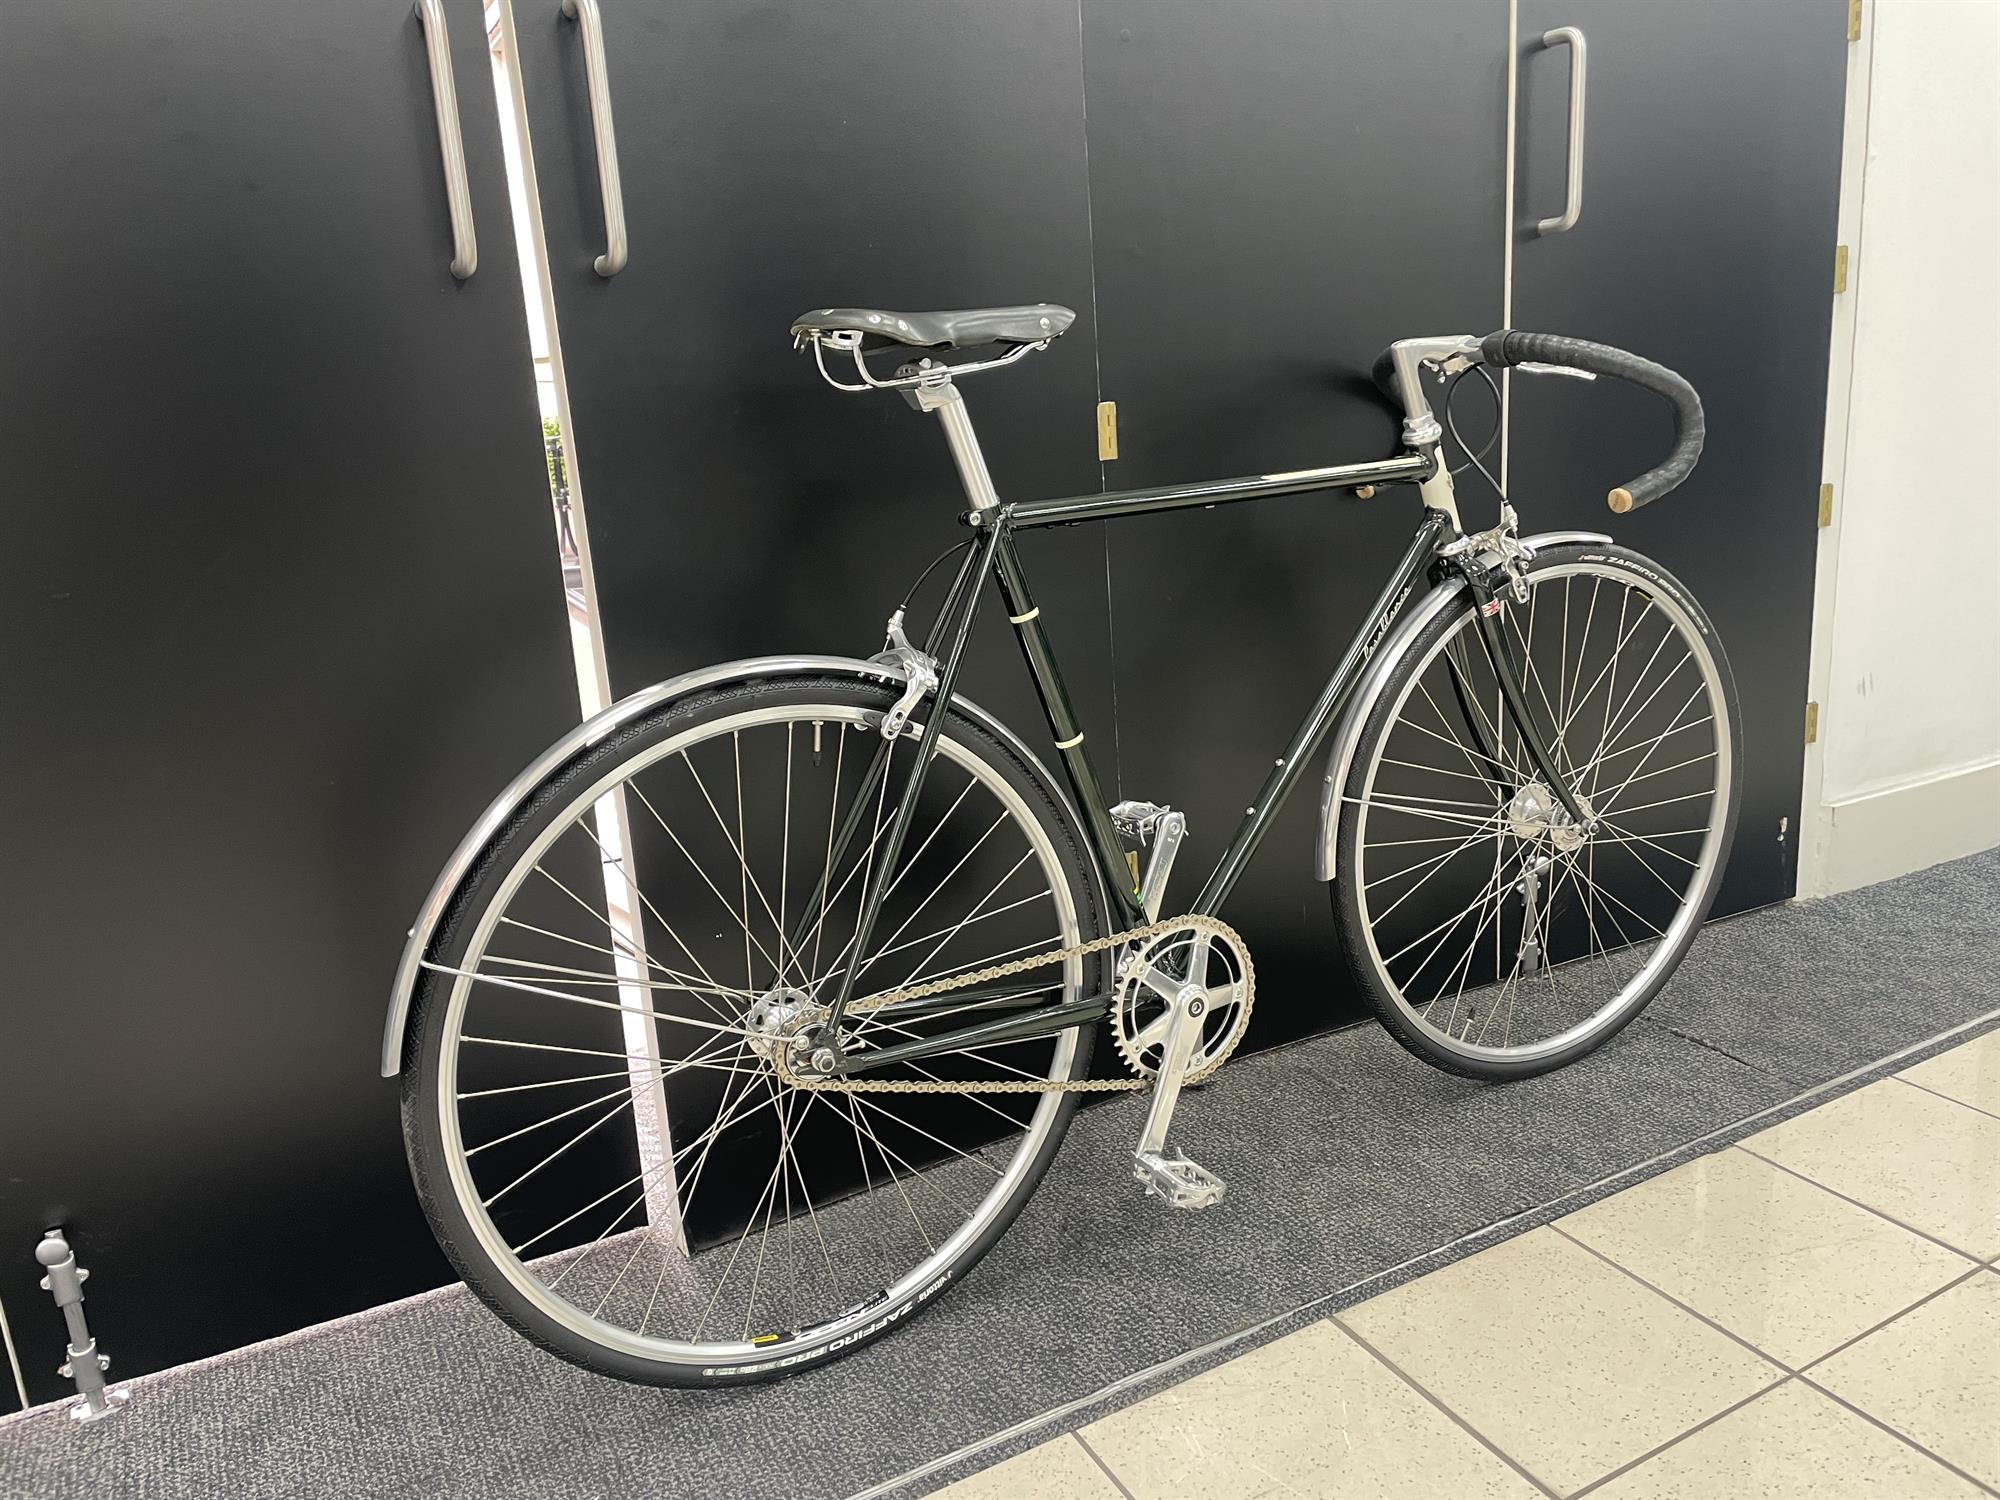 Prototype 60th Anniversary Cooper Bicycle - Image 2 of 10